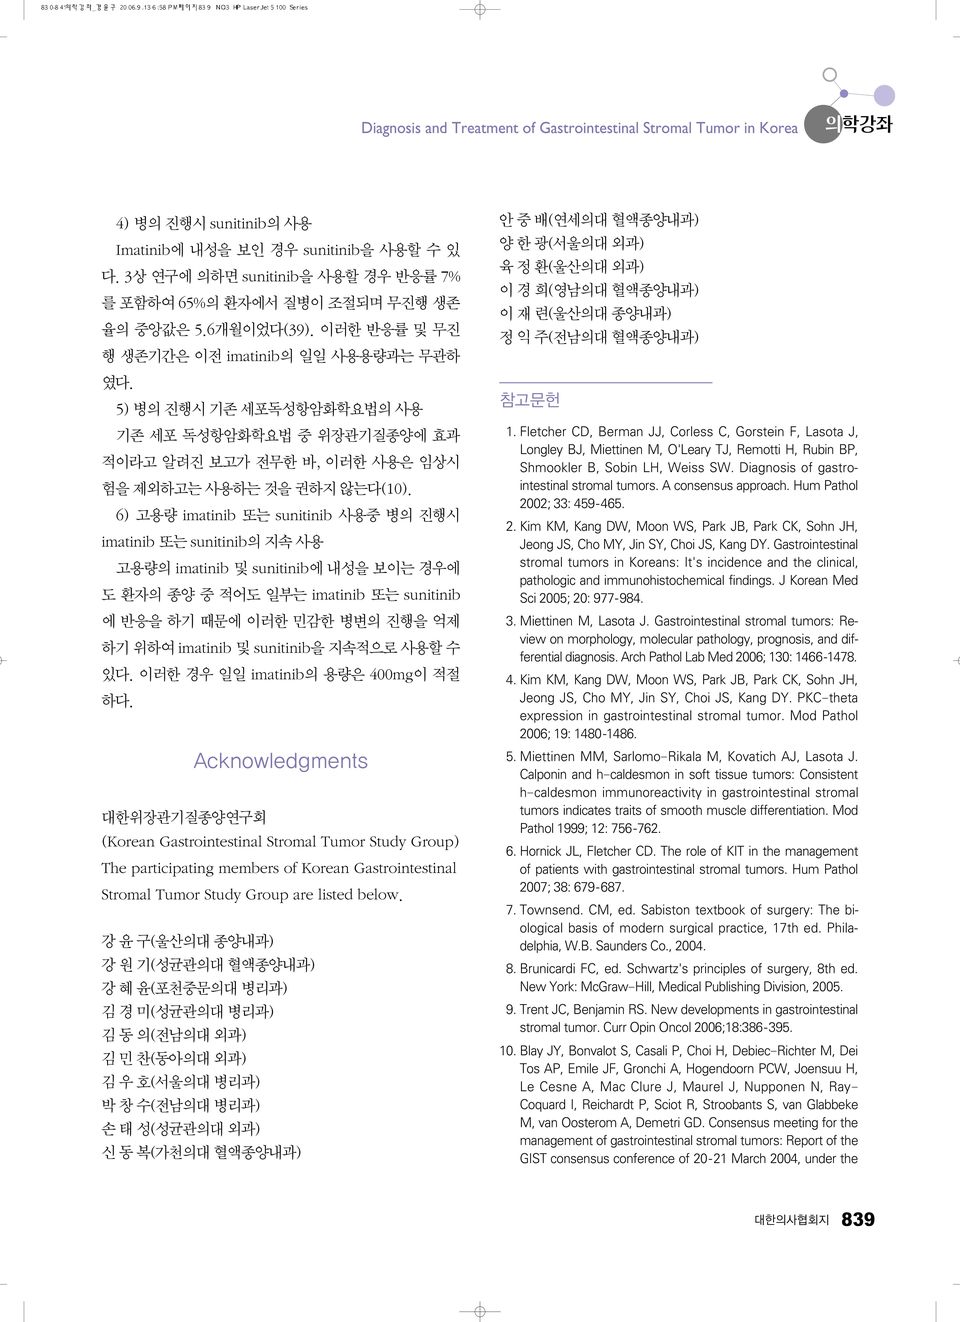 A consensus approach. Hum Pathol 2002; 33: 459-465. 12. Kim KM, Kang DW, Moon WS, Park JB, Park CK, Sohn JH, Jeong JS, Cho MY, Jin SY, Choi JS, Kang DY.